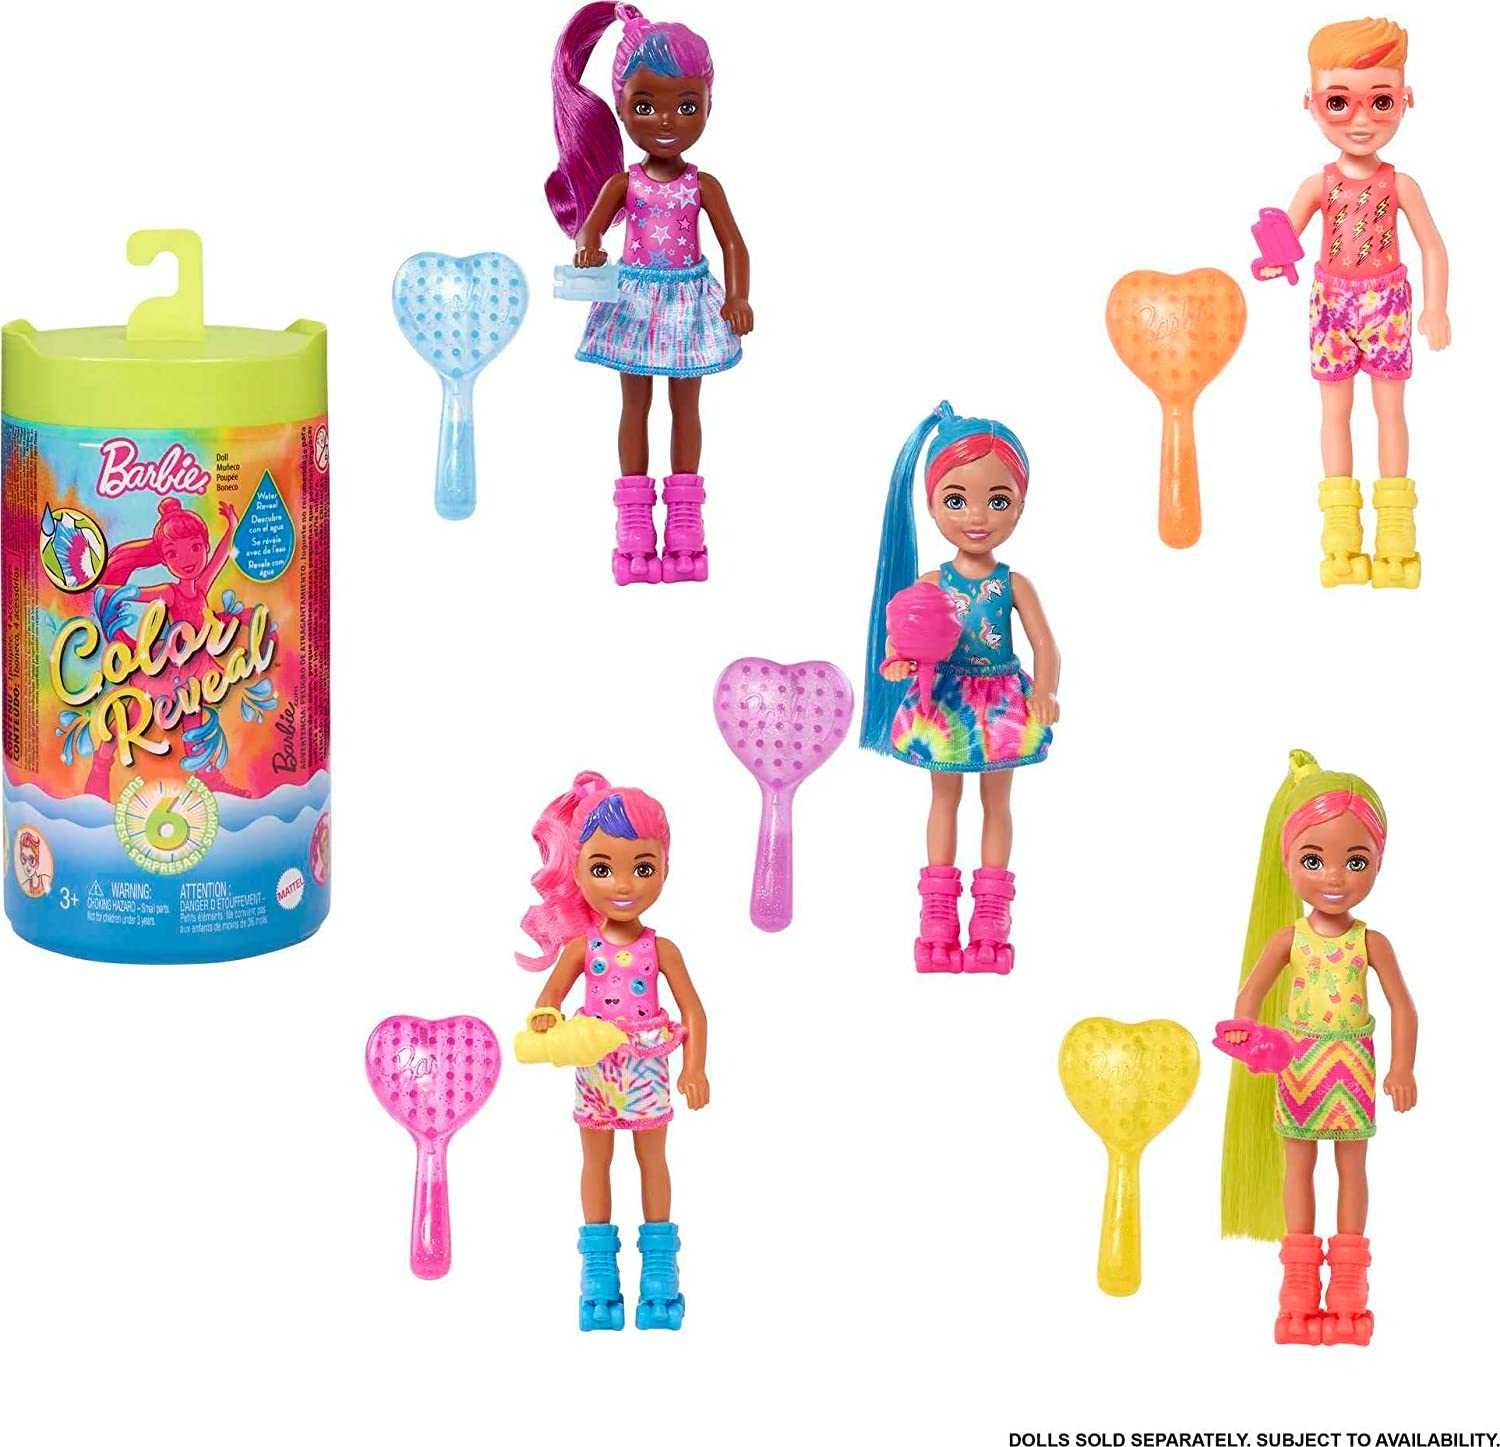 Кукла Челси сюрприз барби с 6-ю сюрпризами Chelsea barbie Color Reveal